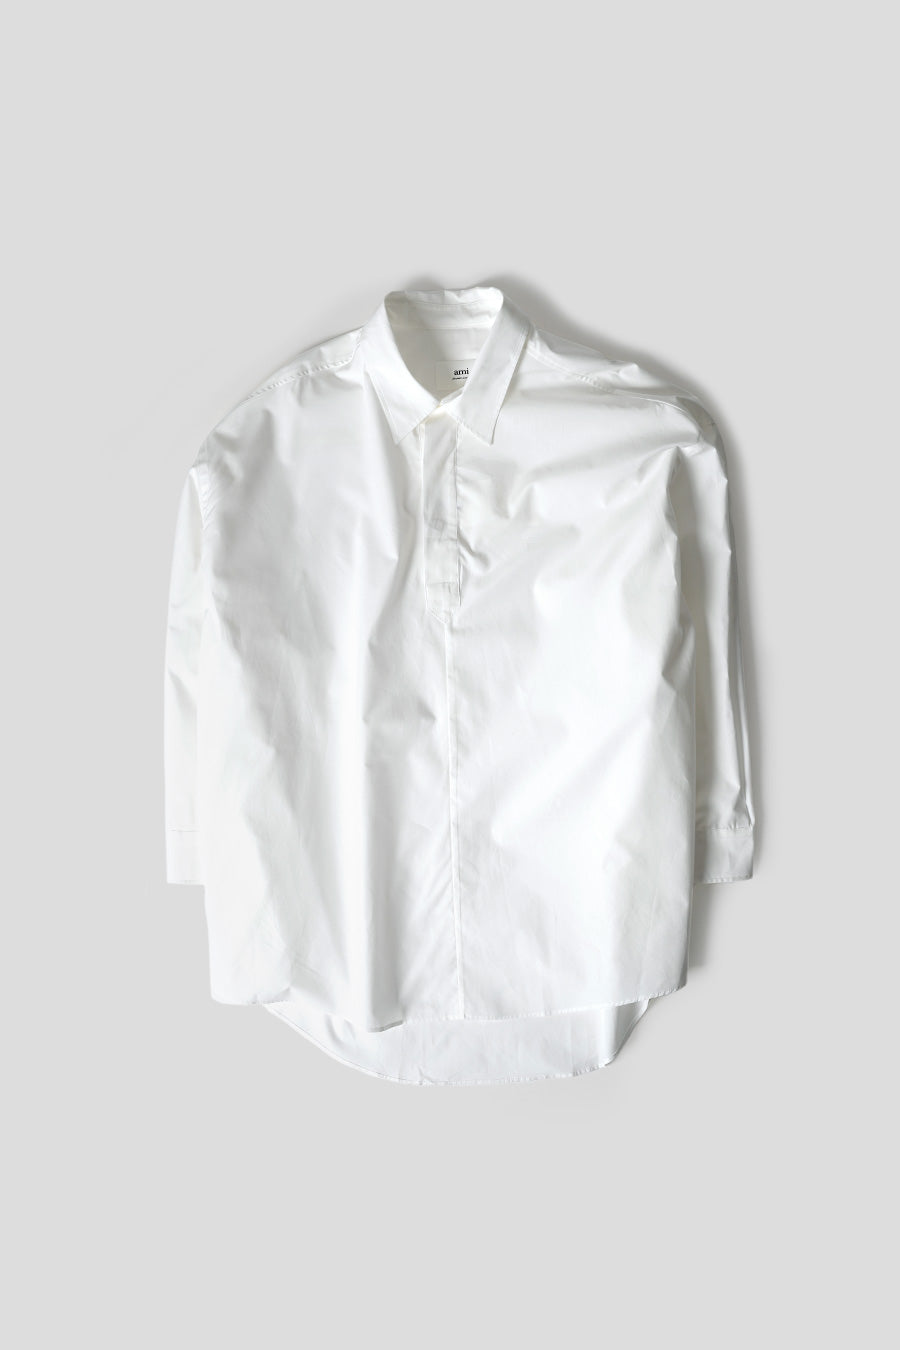 AMI PARIS - SHORT SHIRT DRESS NATURAL WHITE - LE LABO STORE